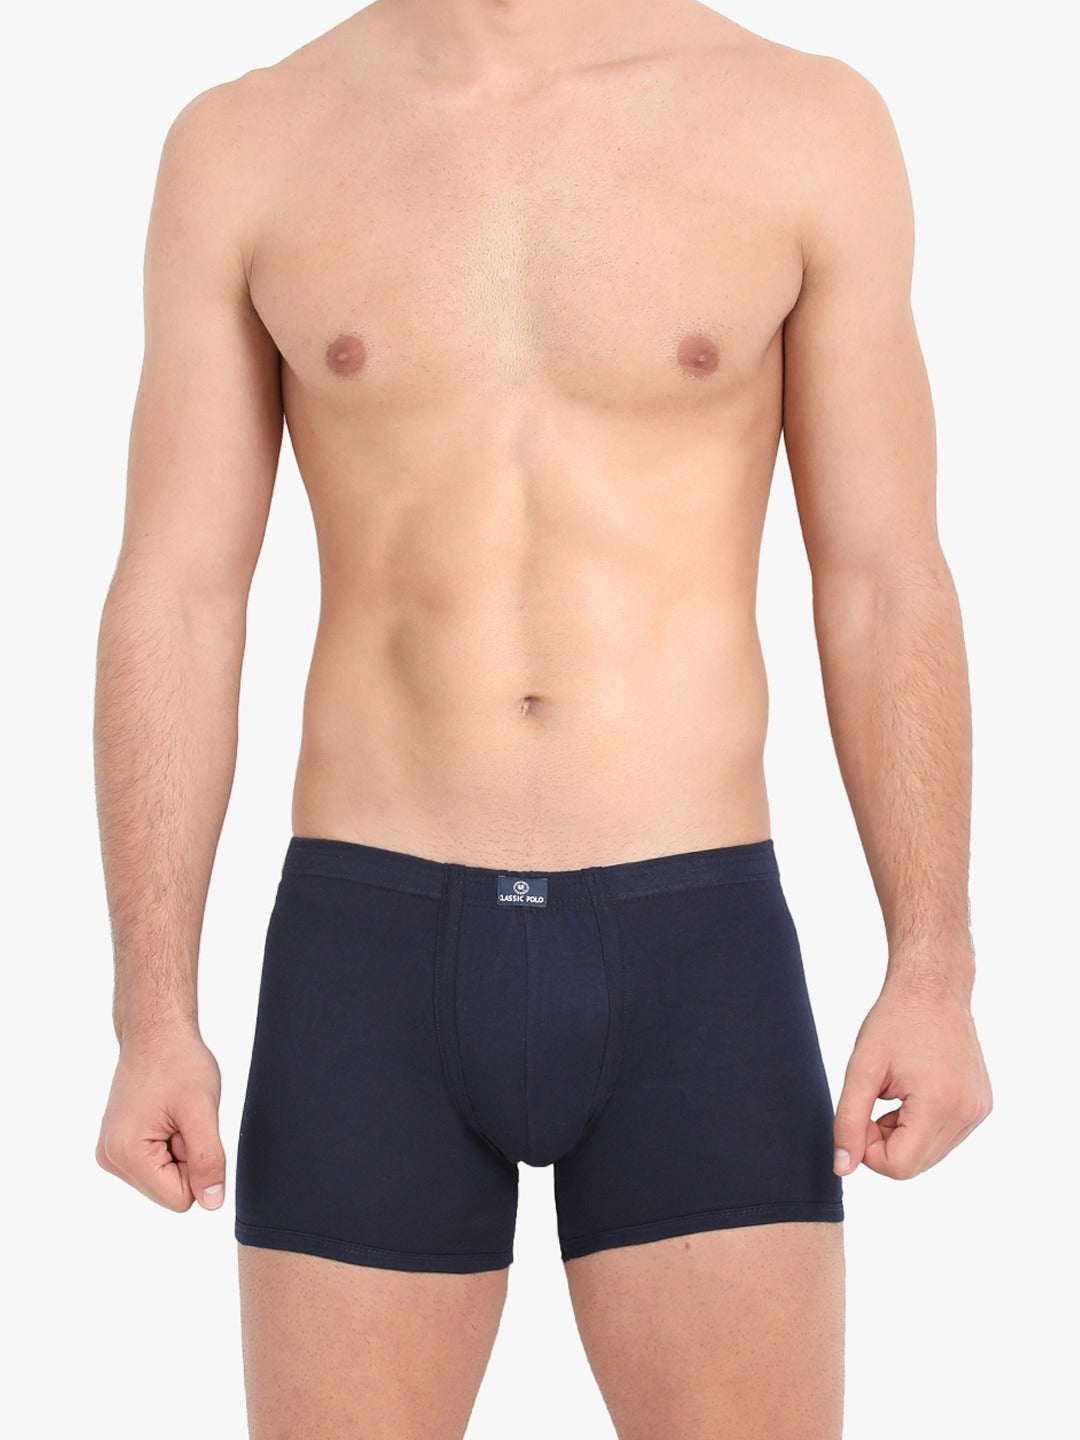 Calvin Klein 100% Authentic Men's Boxer Shorts Trunks – 3 Pack Black/Grey/ White